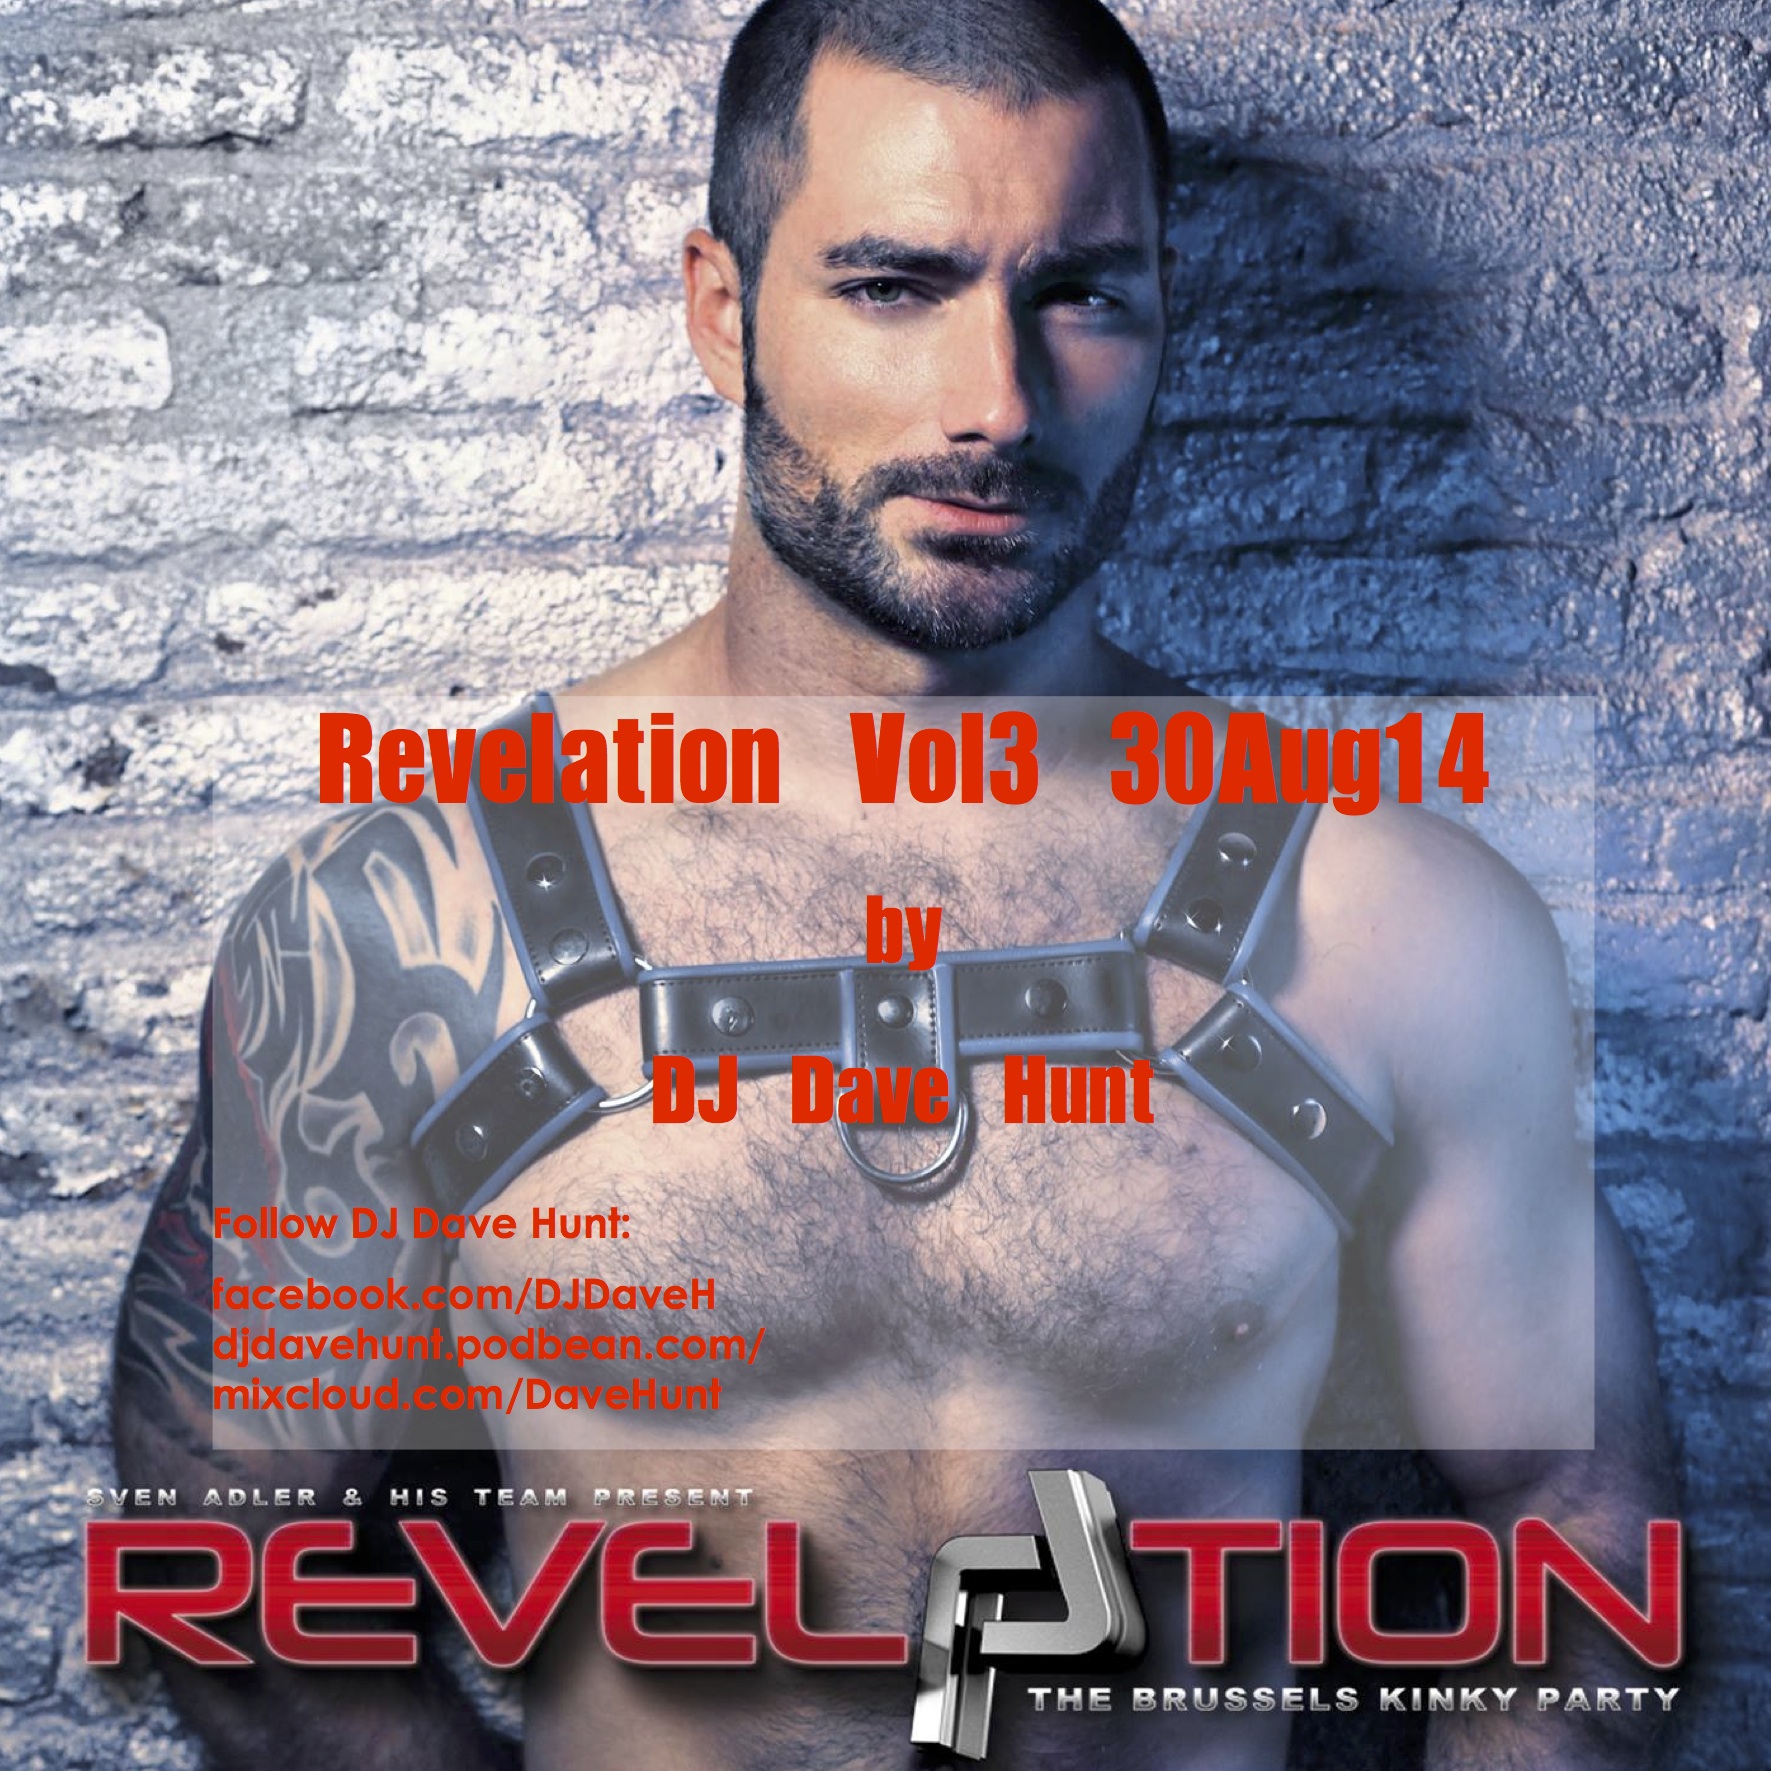 Revelation Vol3 30Aug14 by DJ Dave Hunt